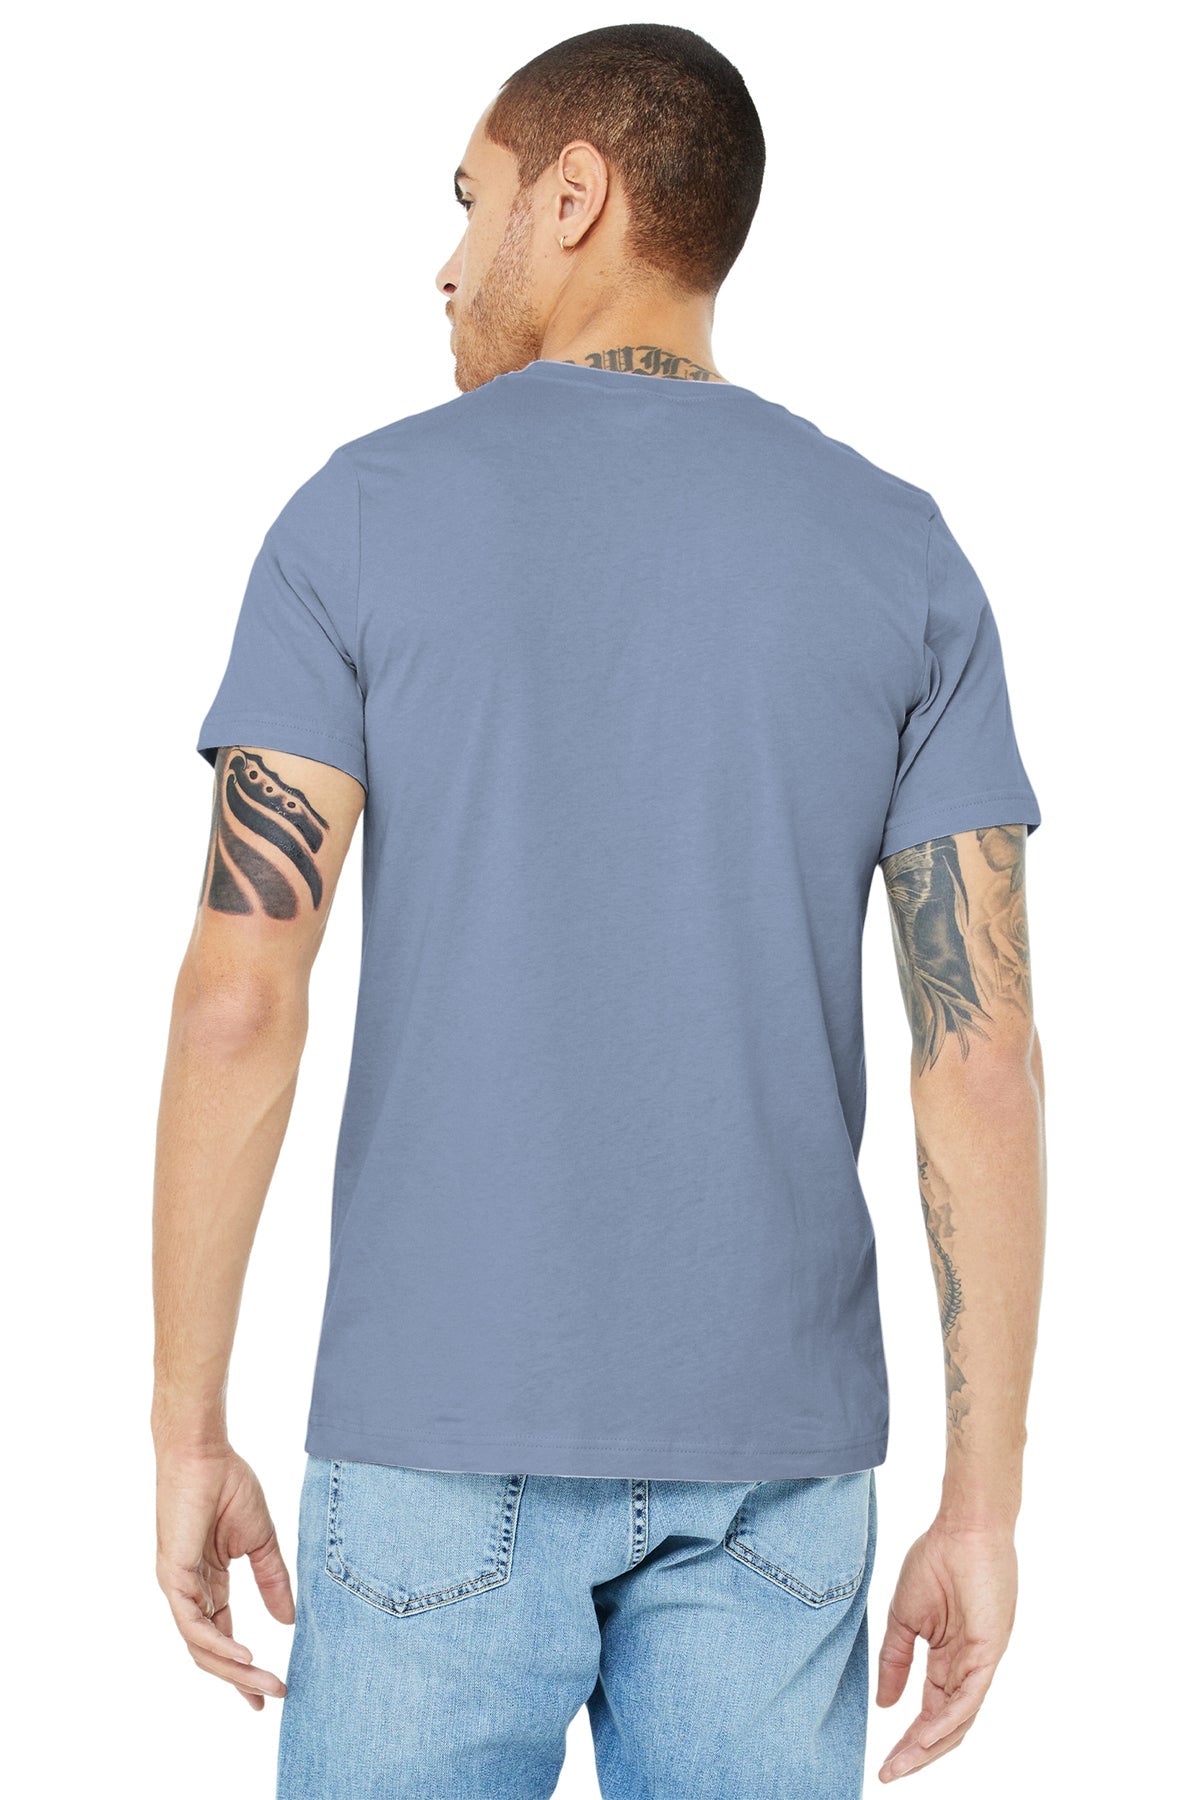 bella + canvas unisex jersey short sleeve t-shirt 3001c heather blue